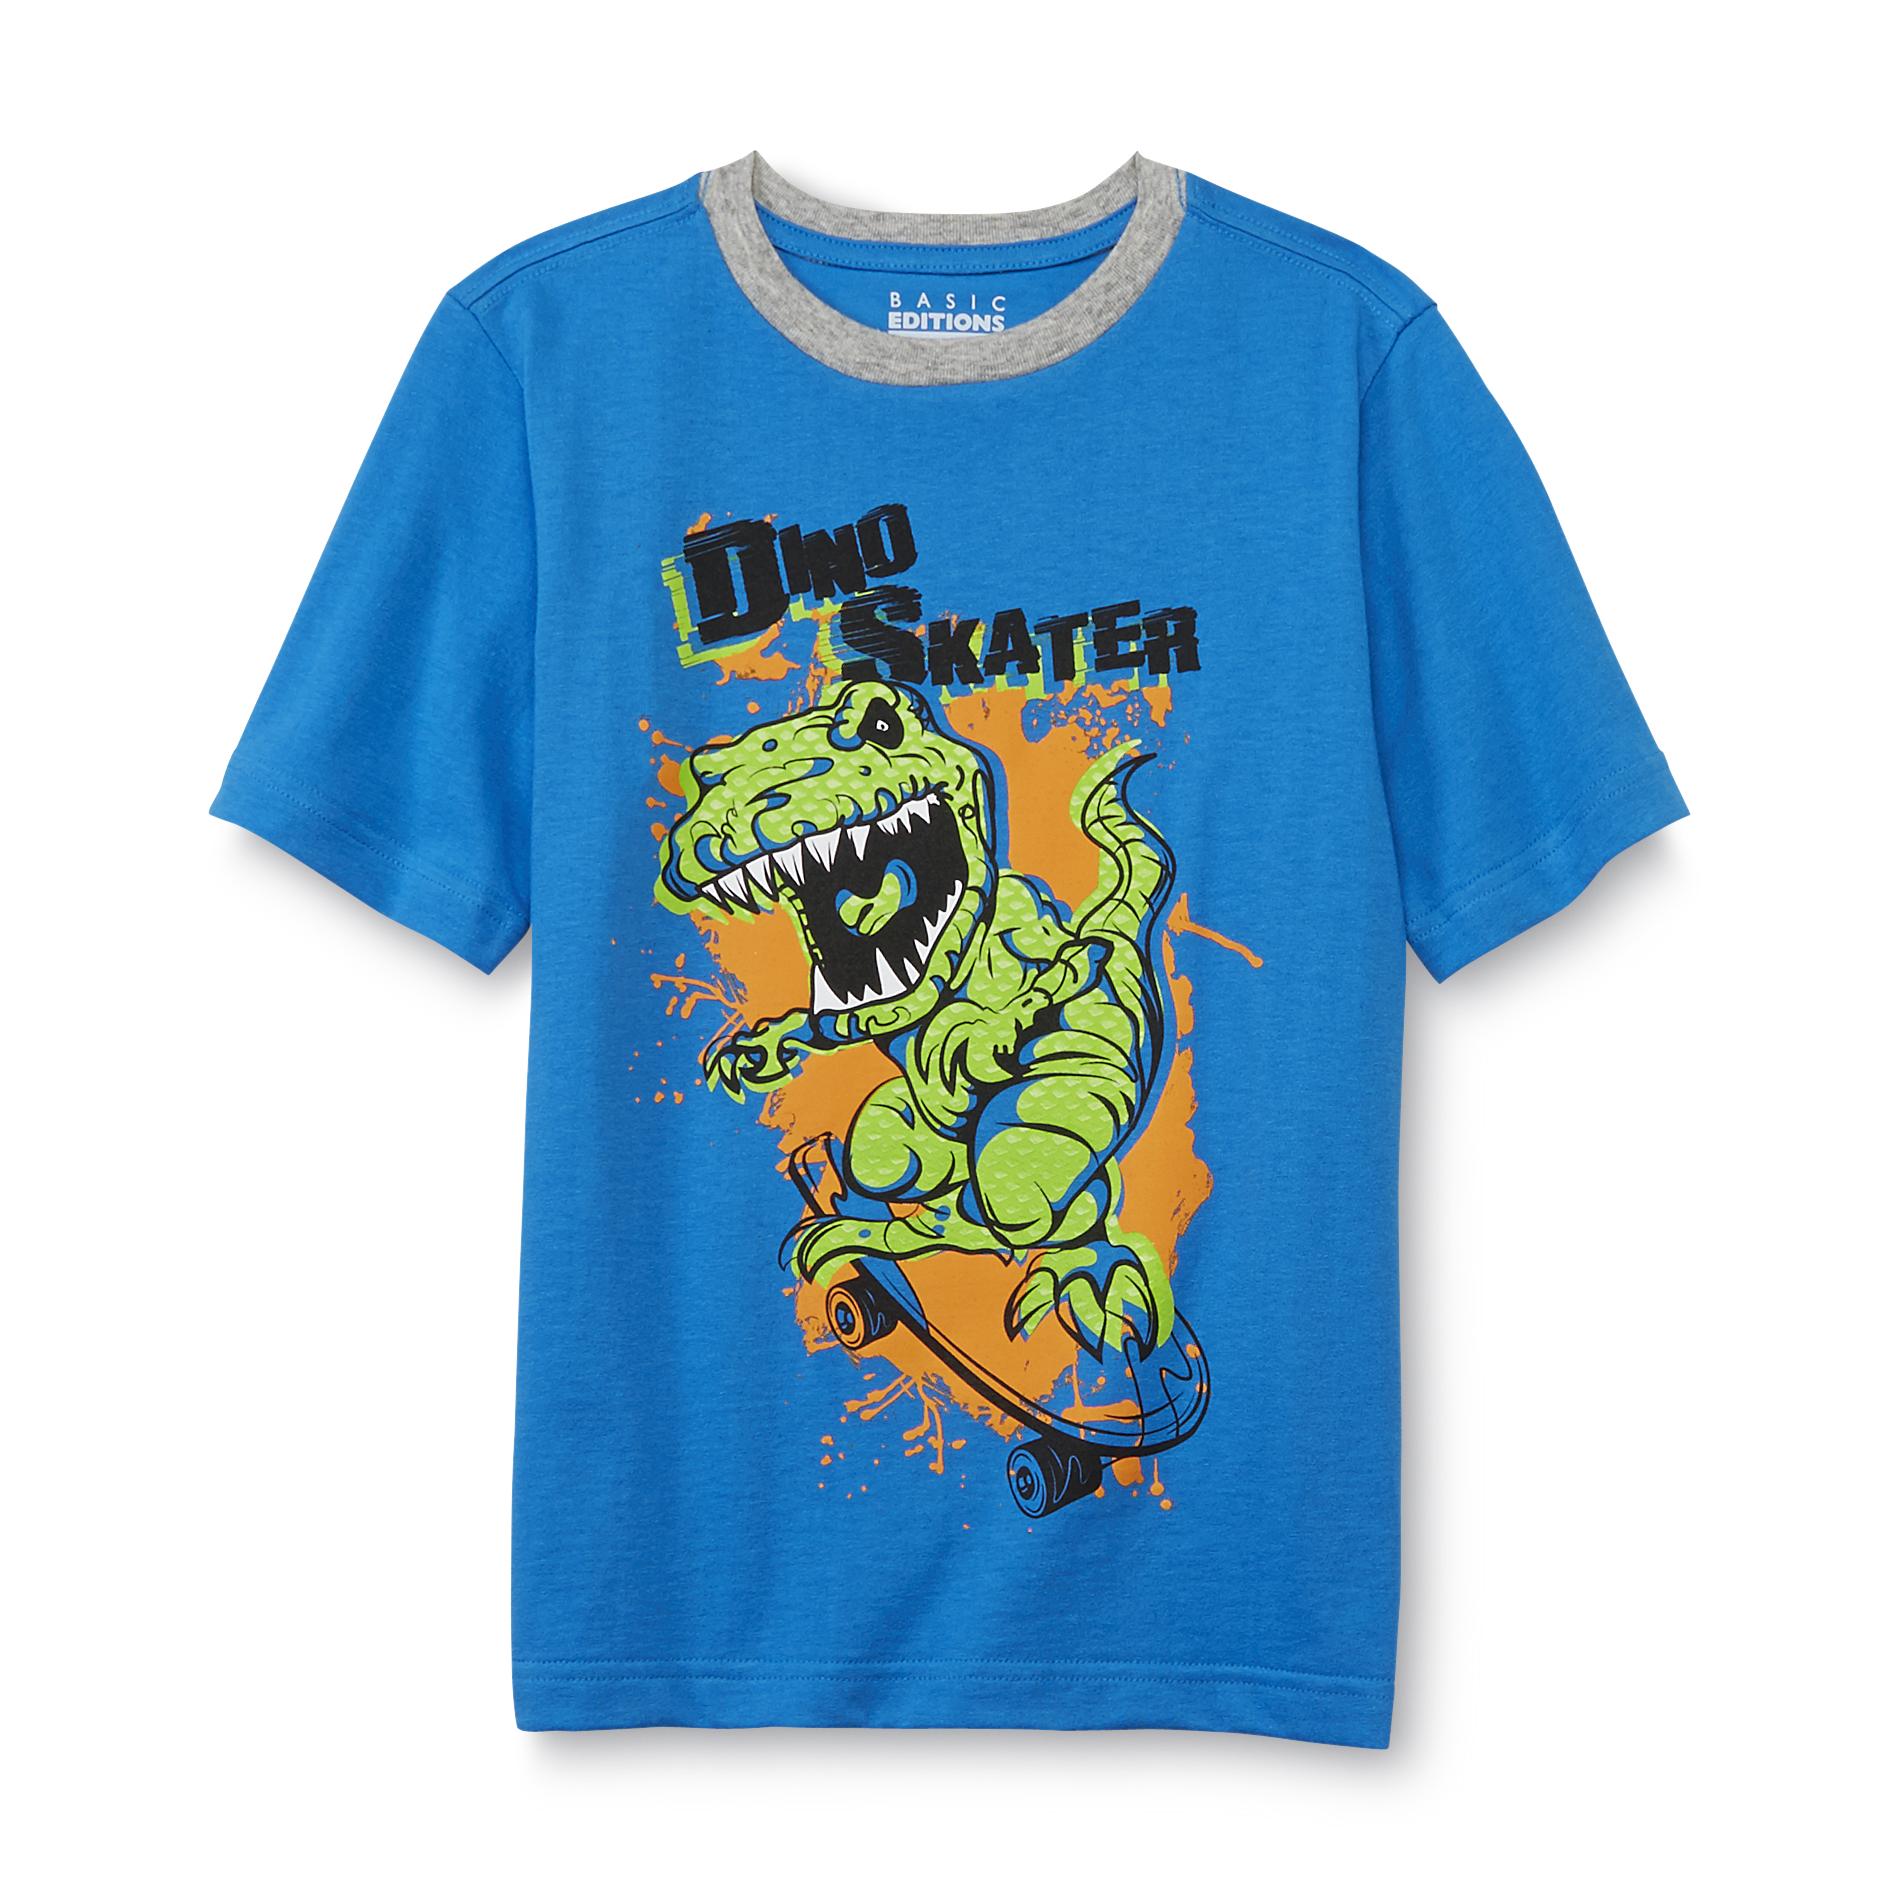 Basic Editions Boy's Graphic T-Shirt - Dino Skater